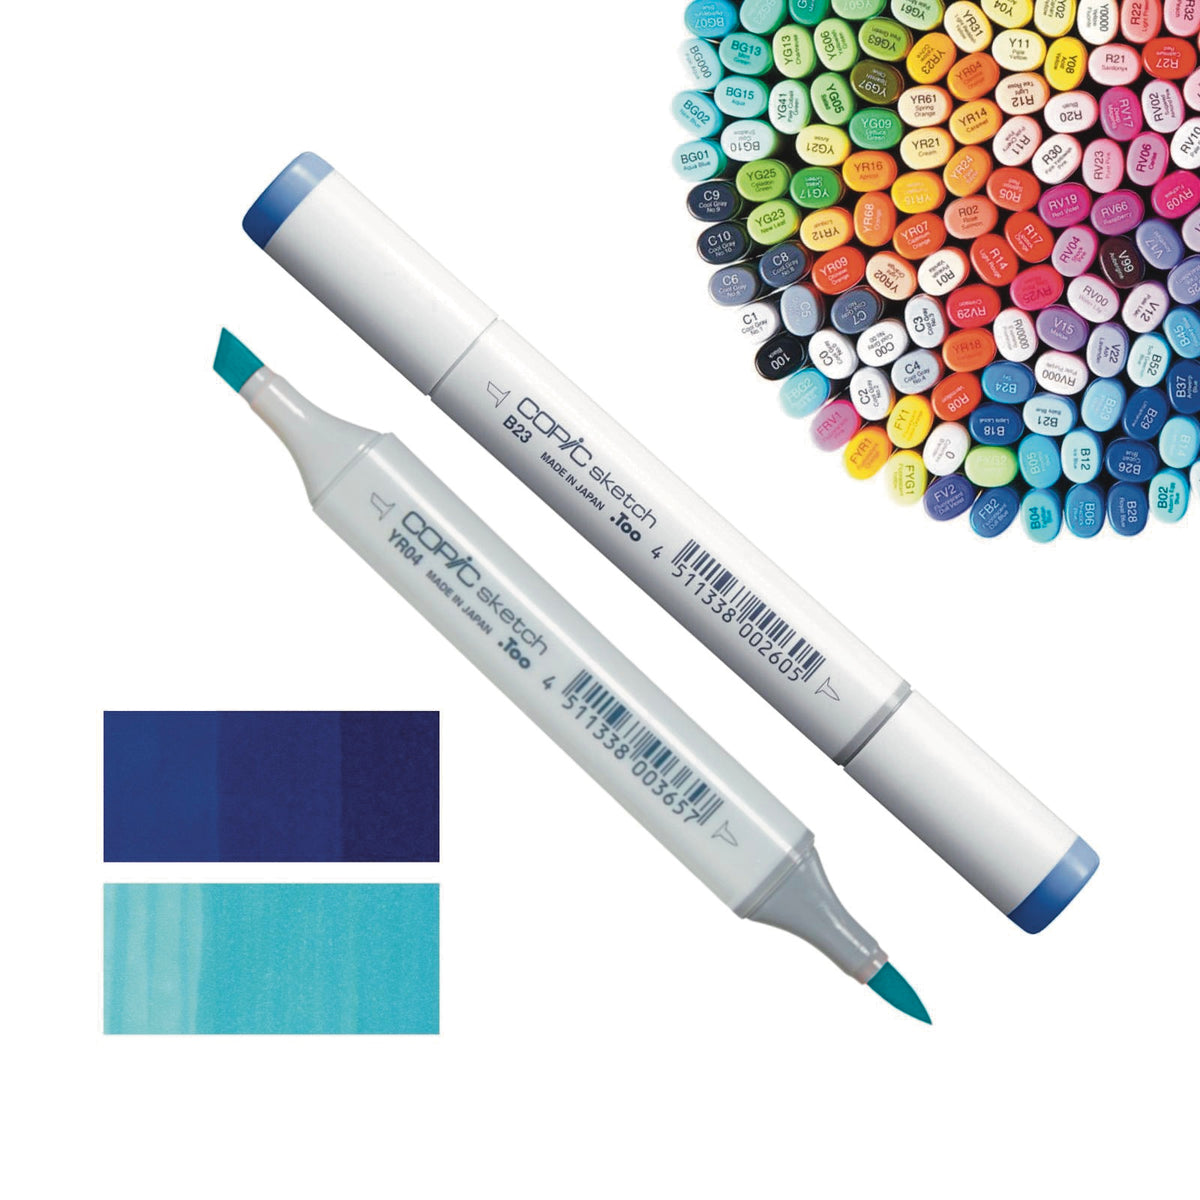 Best Beginner Copic Blends: Blue-Green BG Marker Combinations (aqua and  turquoise) — Marker Novice